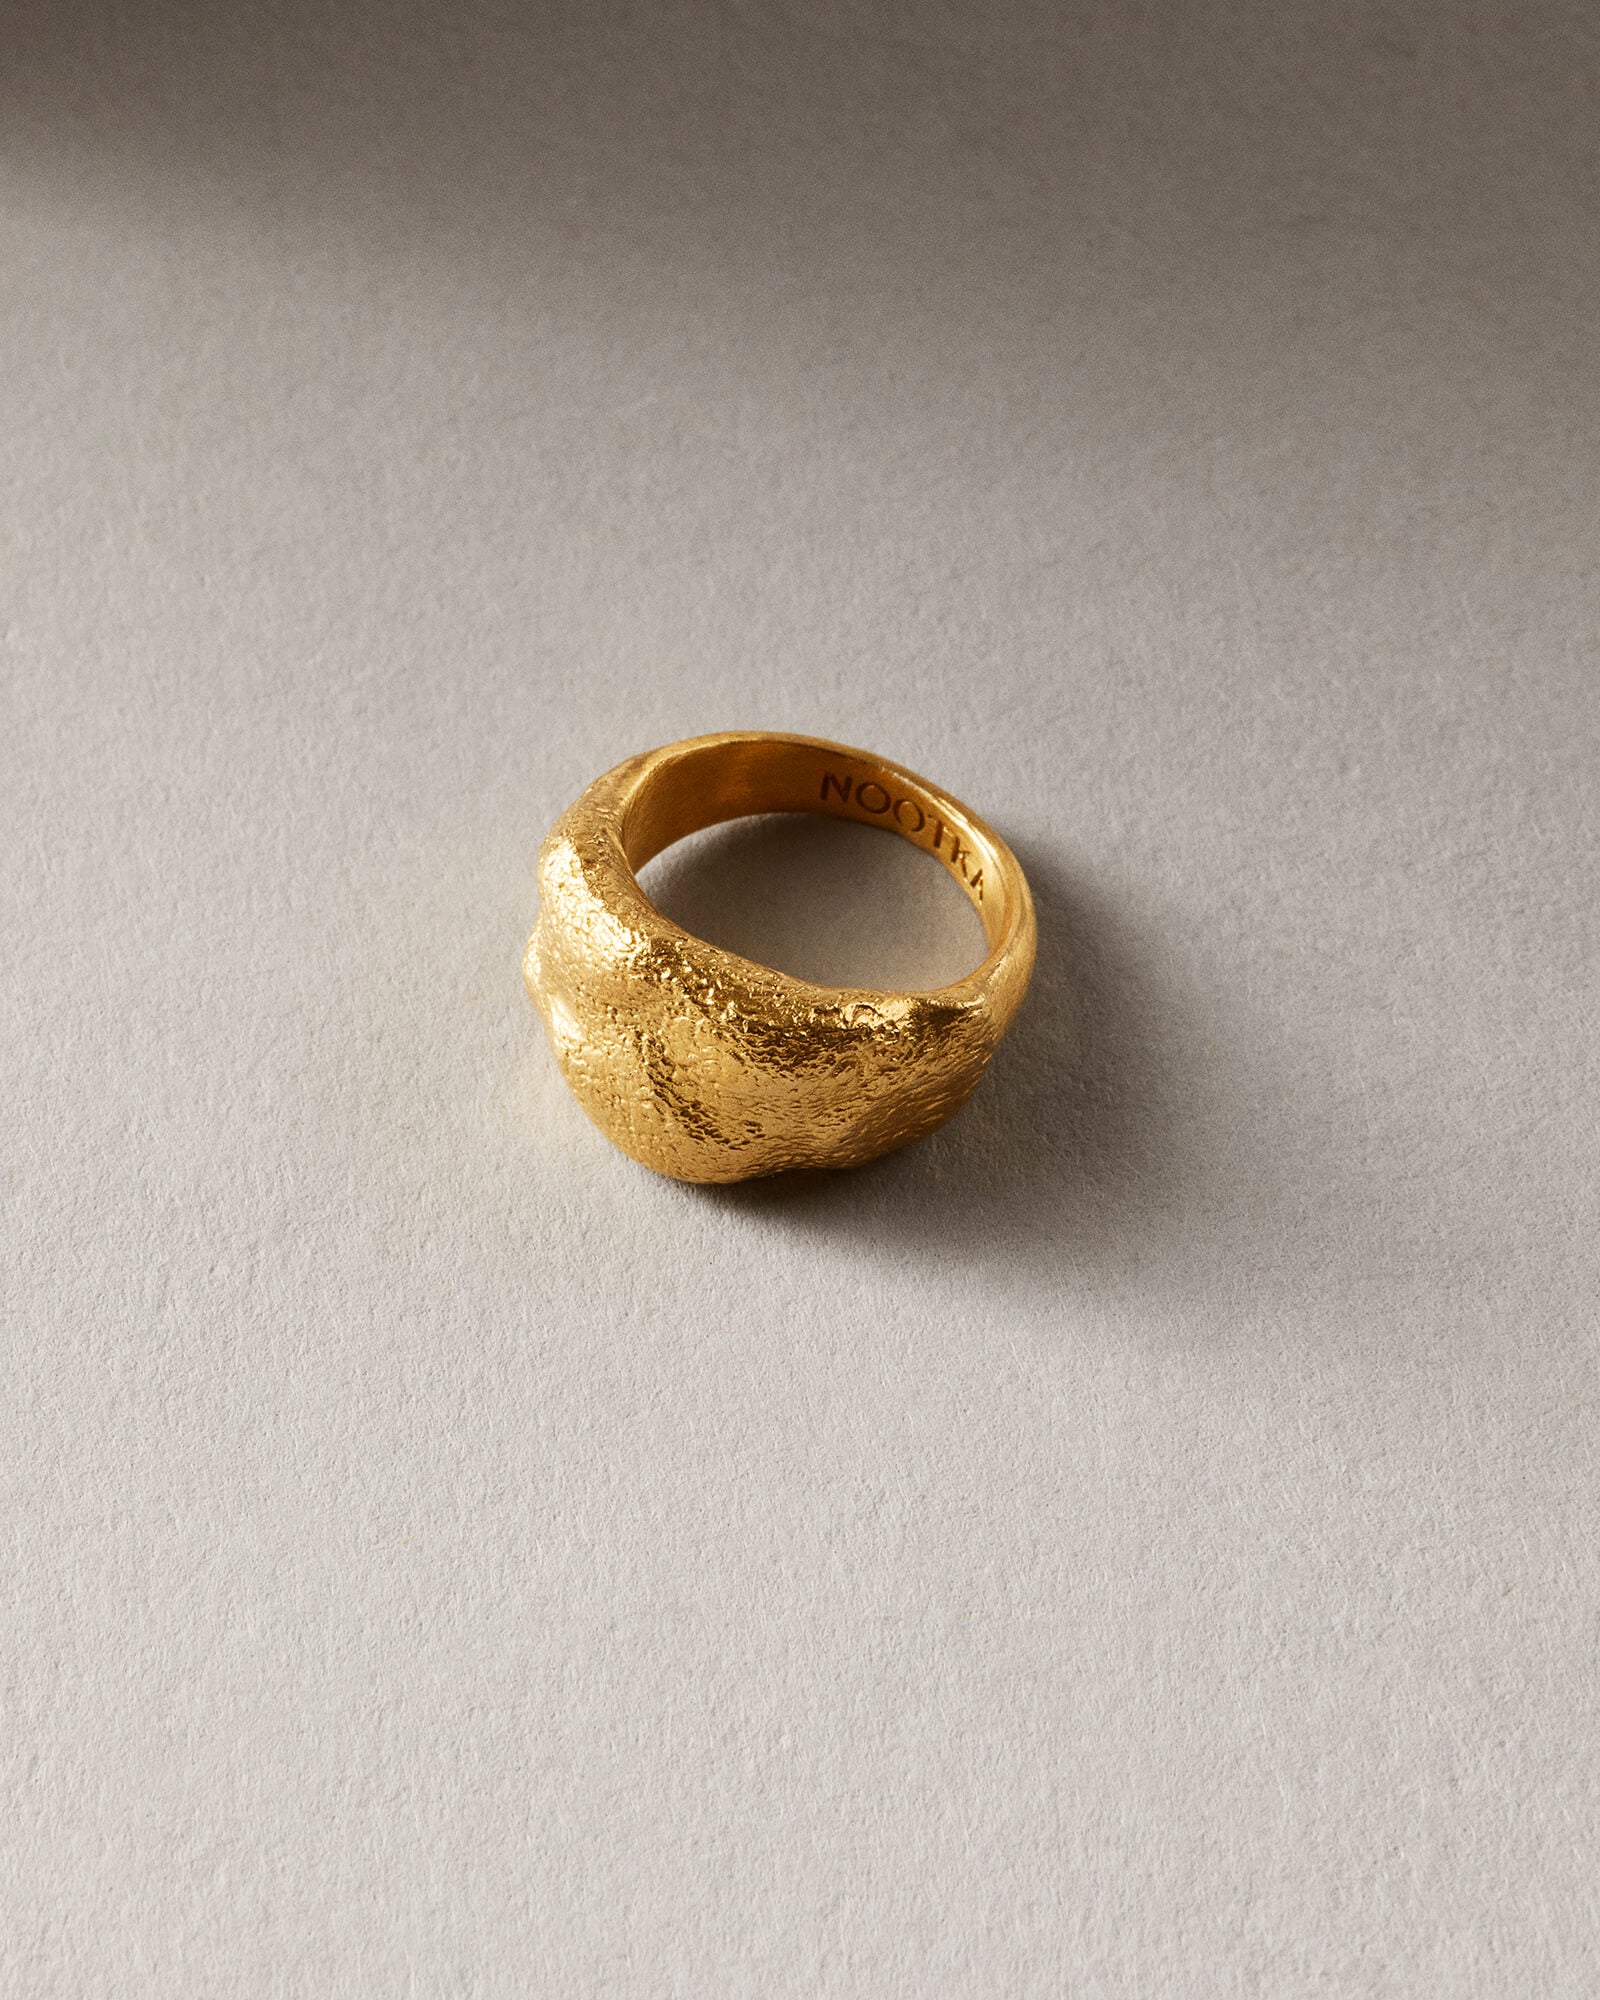 Nootka Signet ring gold